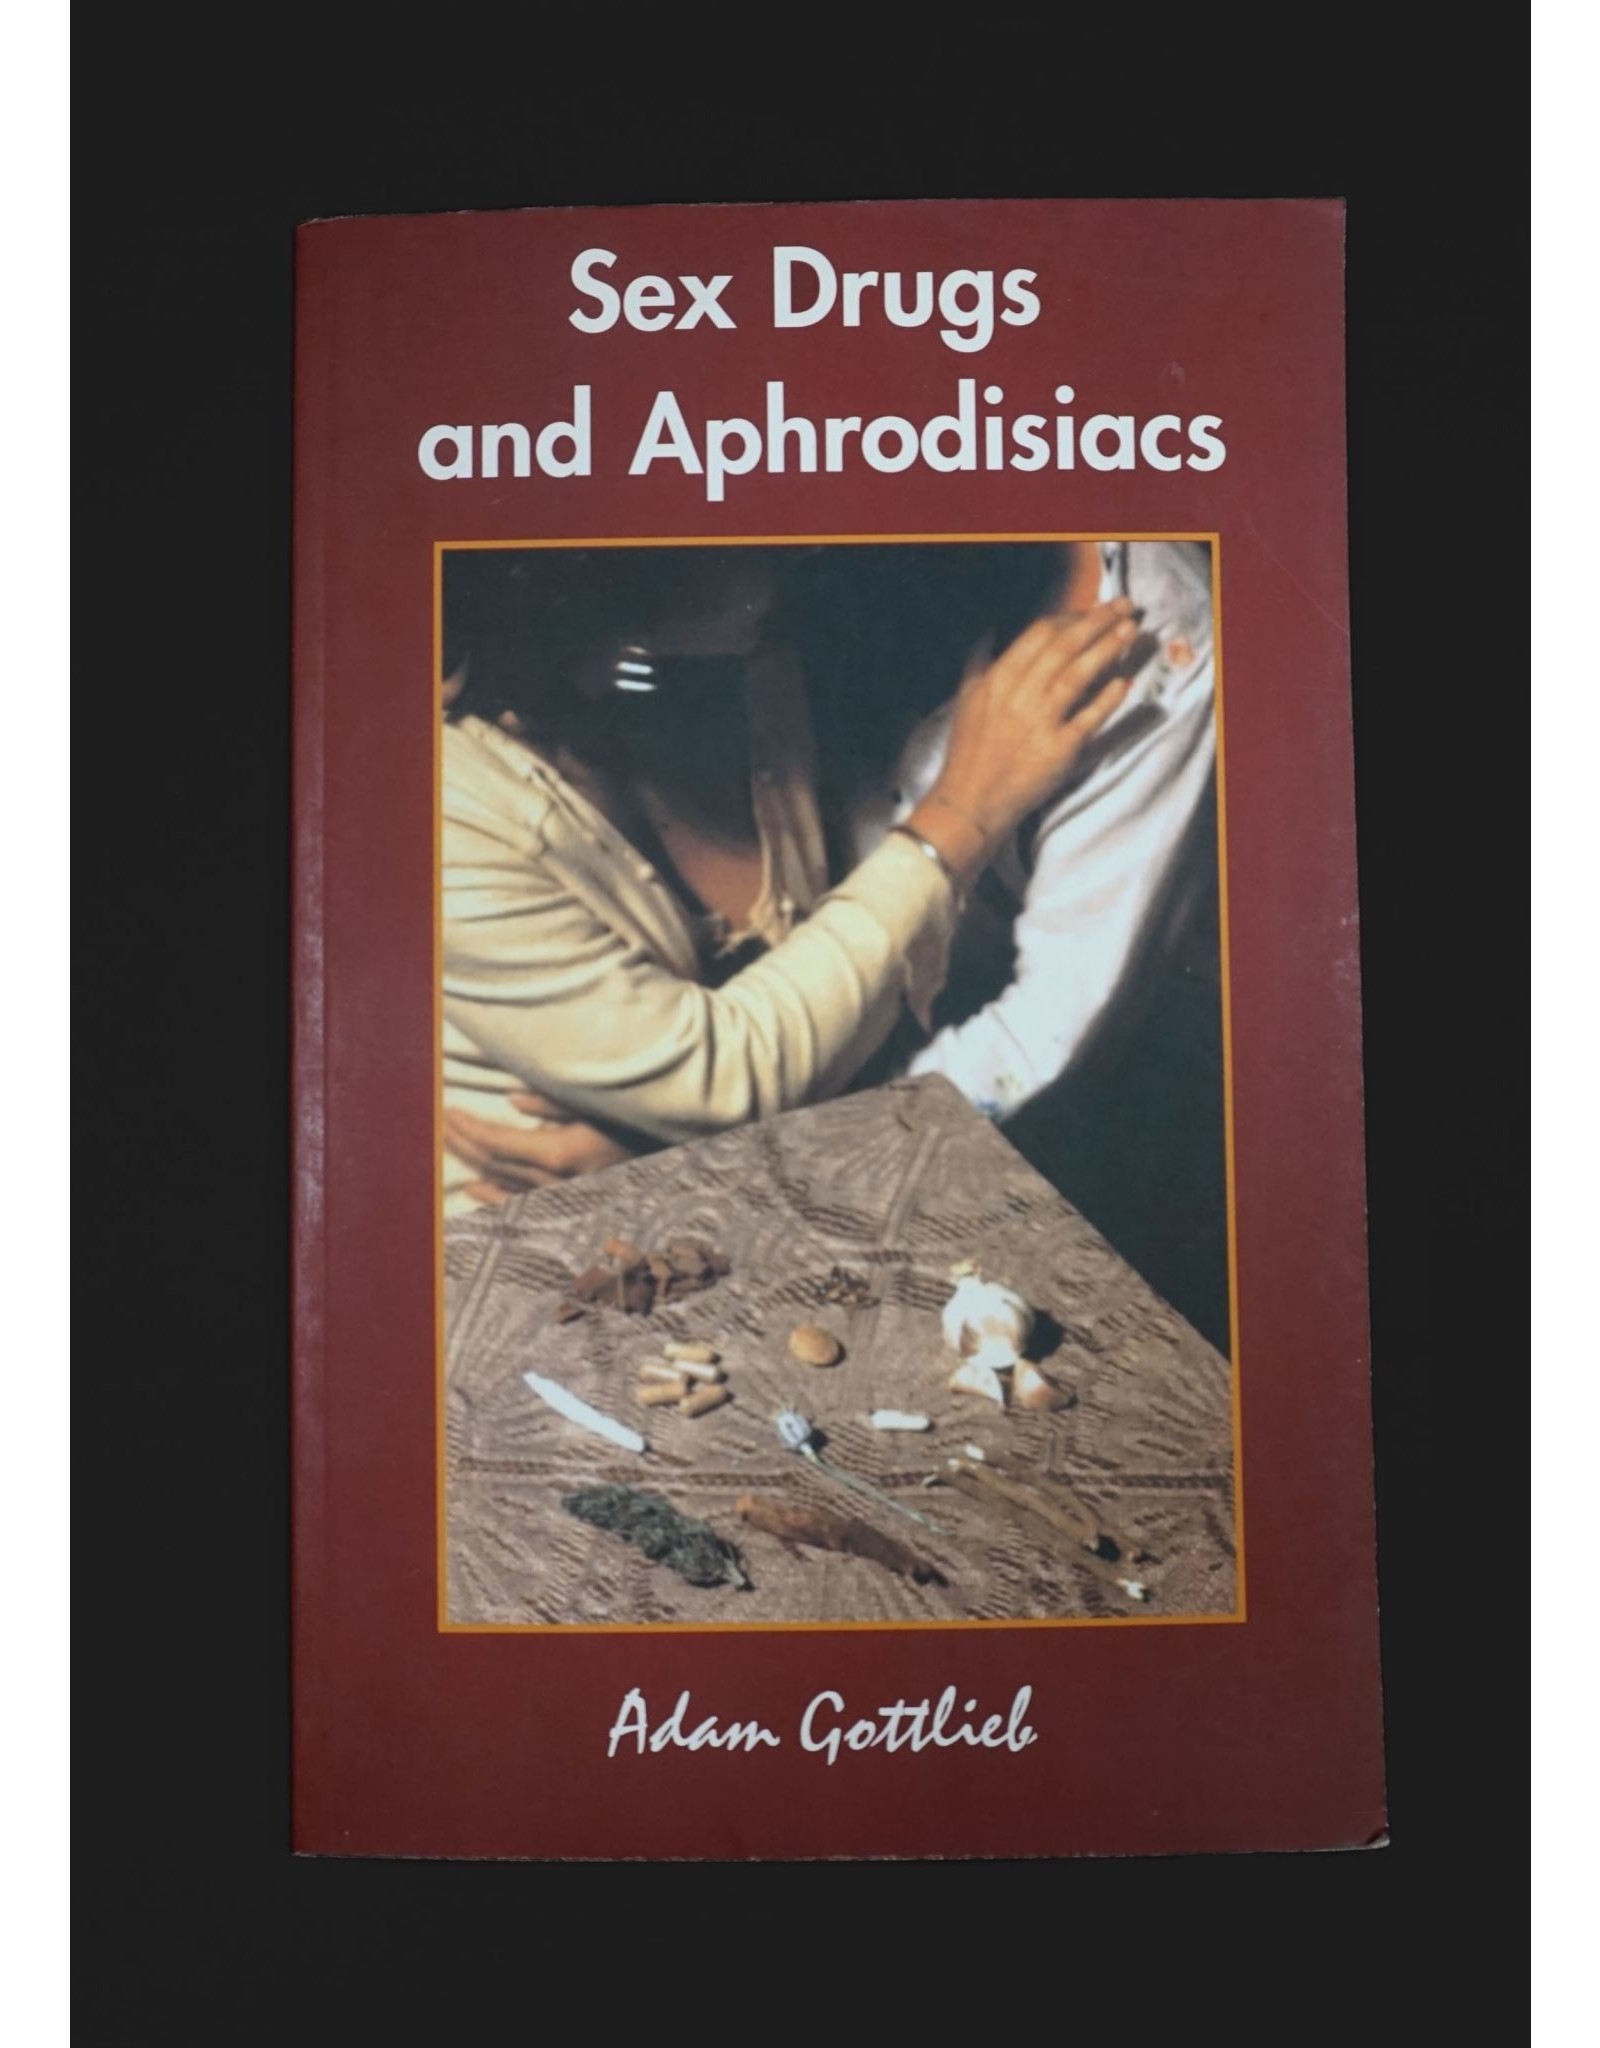 Sex, Drugs and Aphrodisiacs